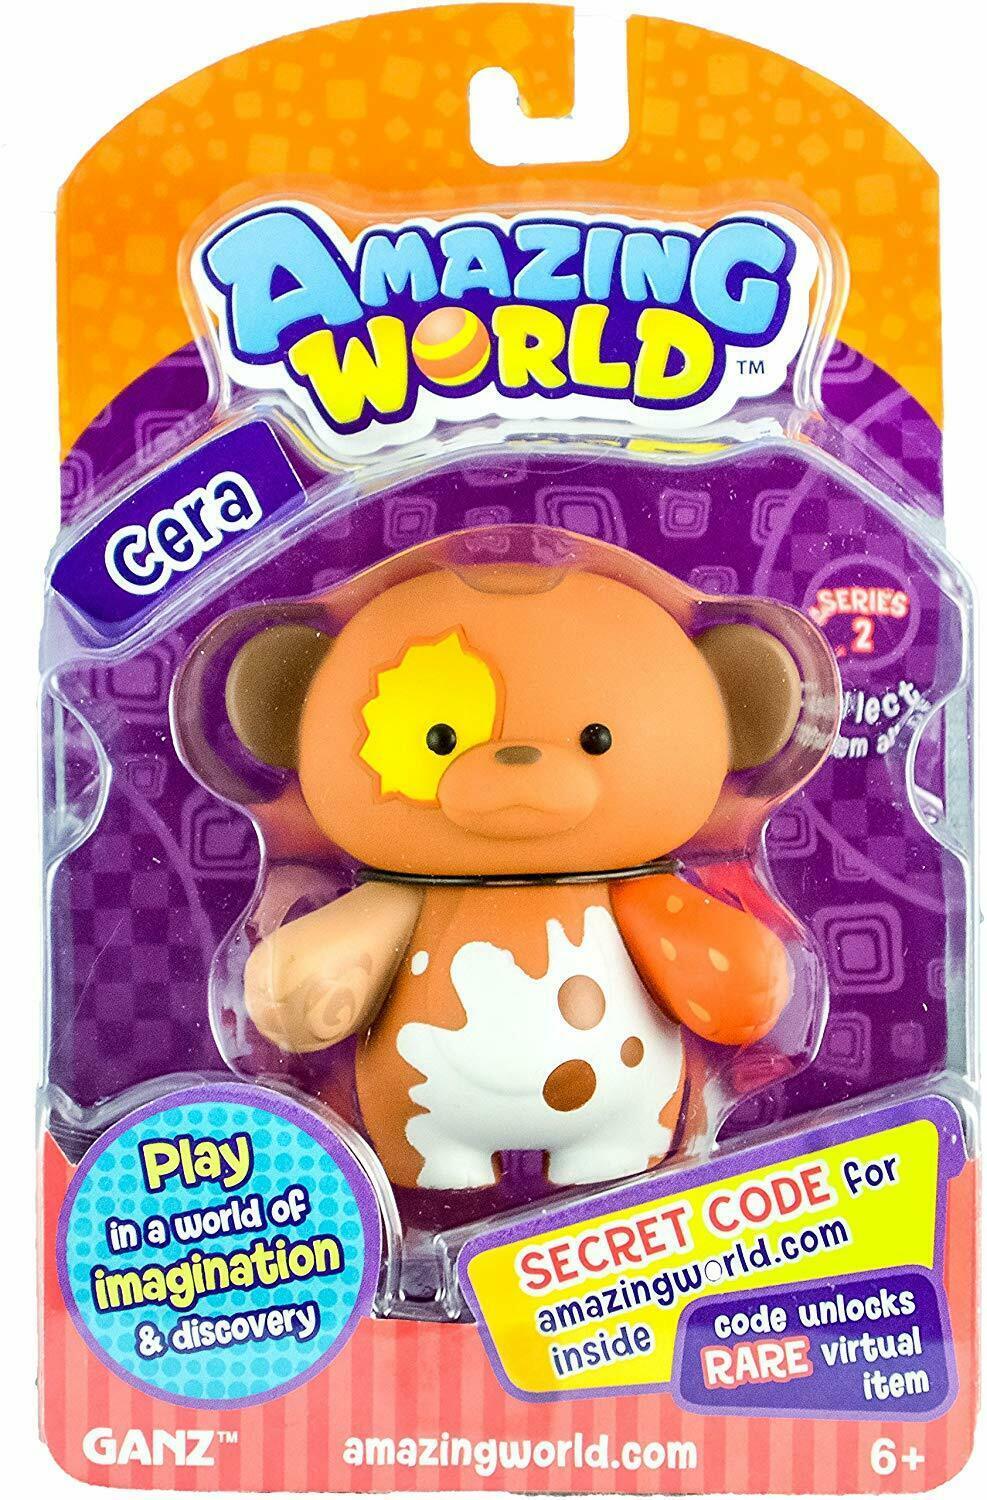 Amazing World Figures Cera Monkey (From the Creators of Webkinz) - $7.91